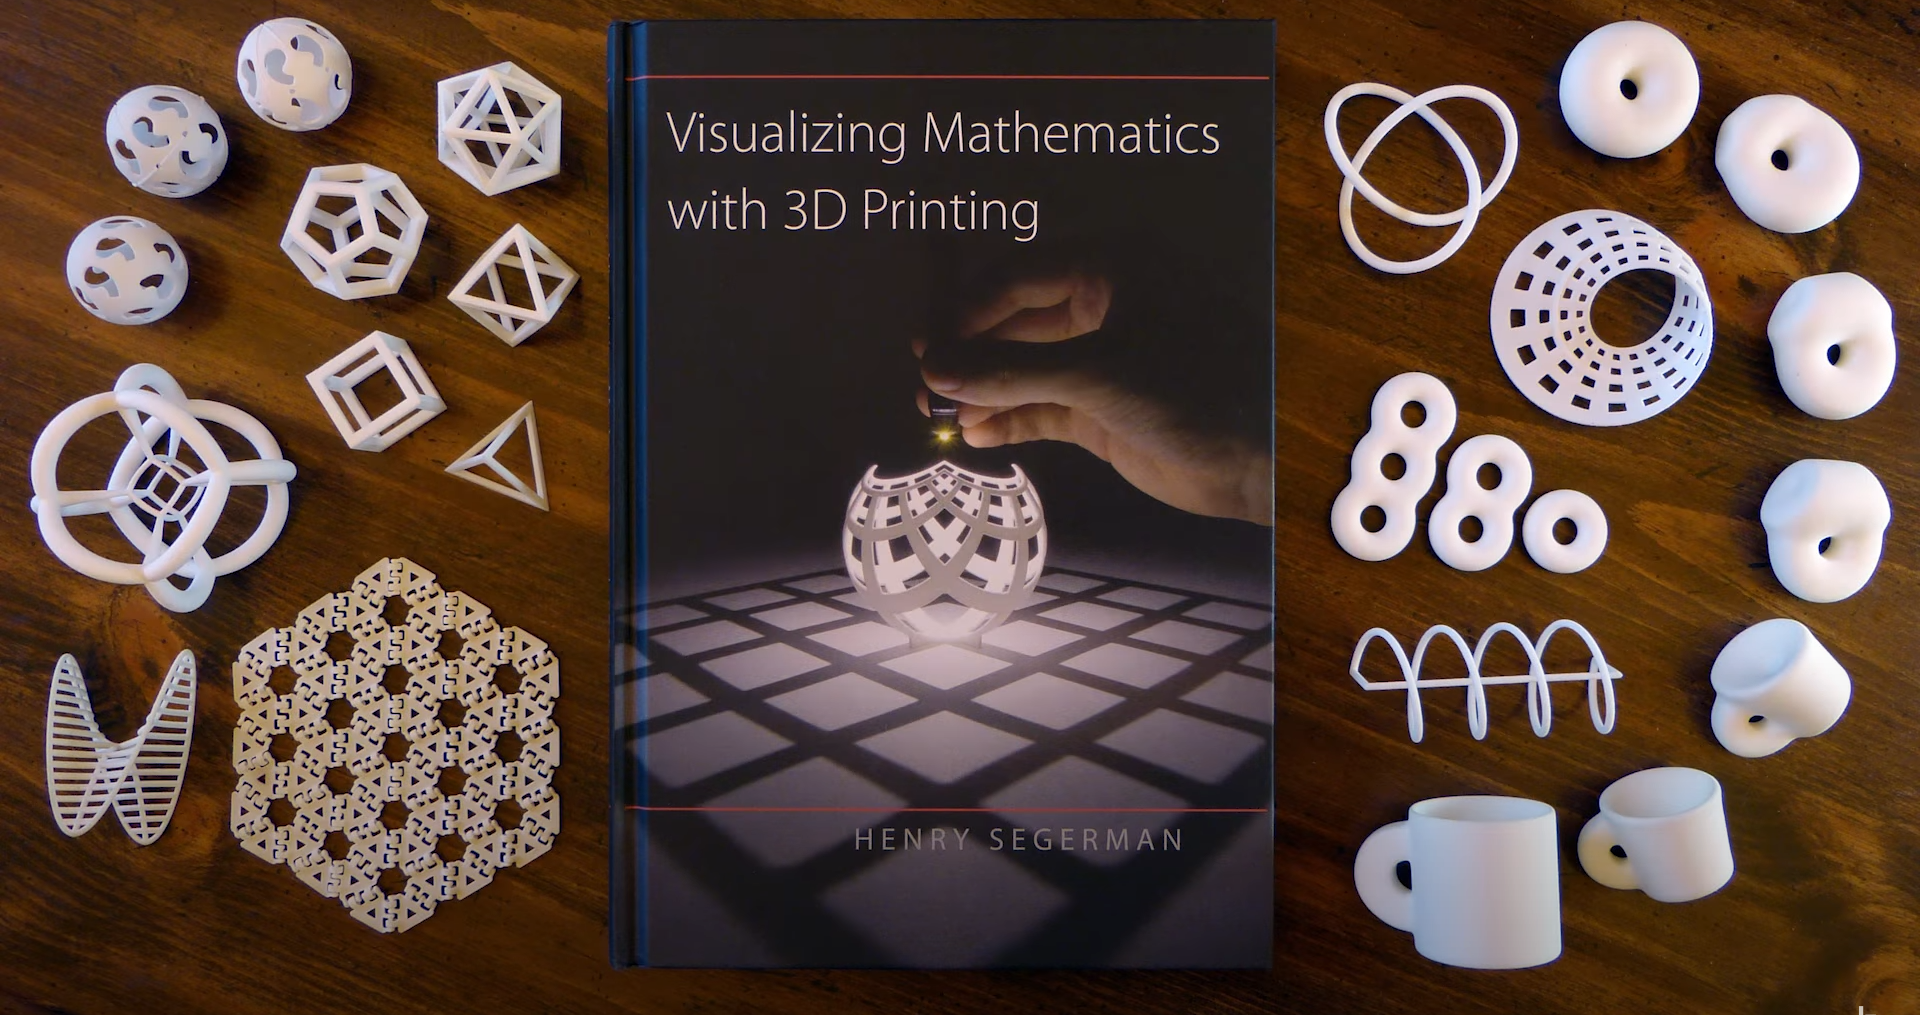 Visualizing mathematics with 3D printing. Source: Henry Segerman